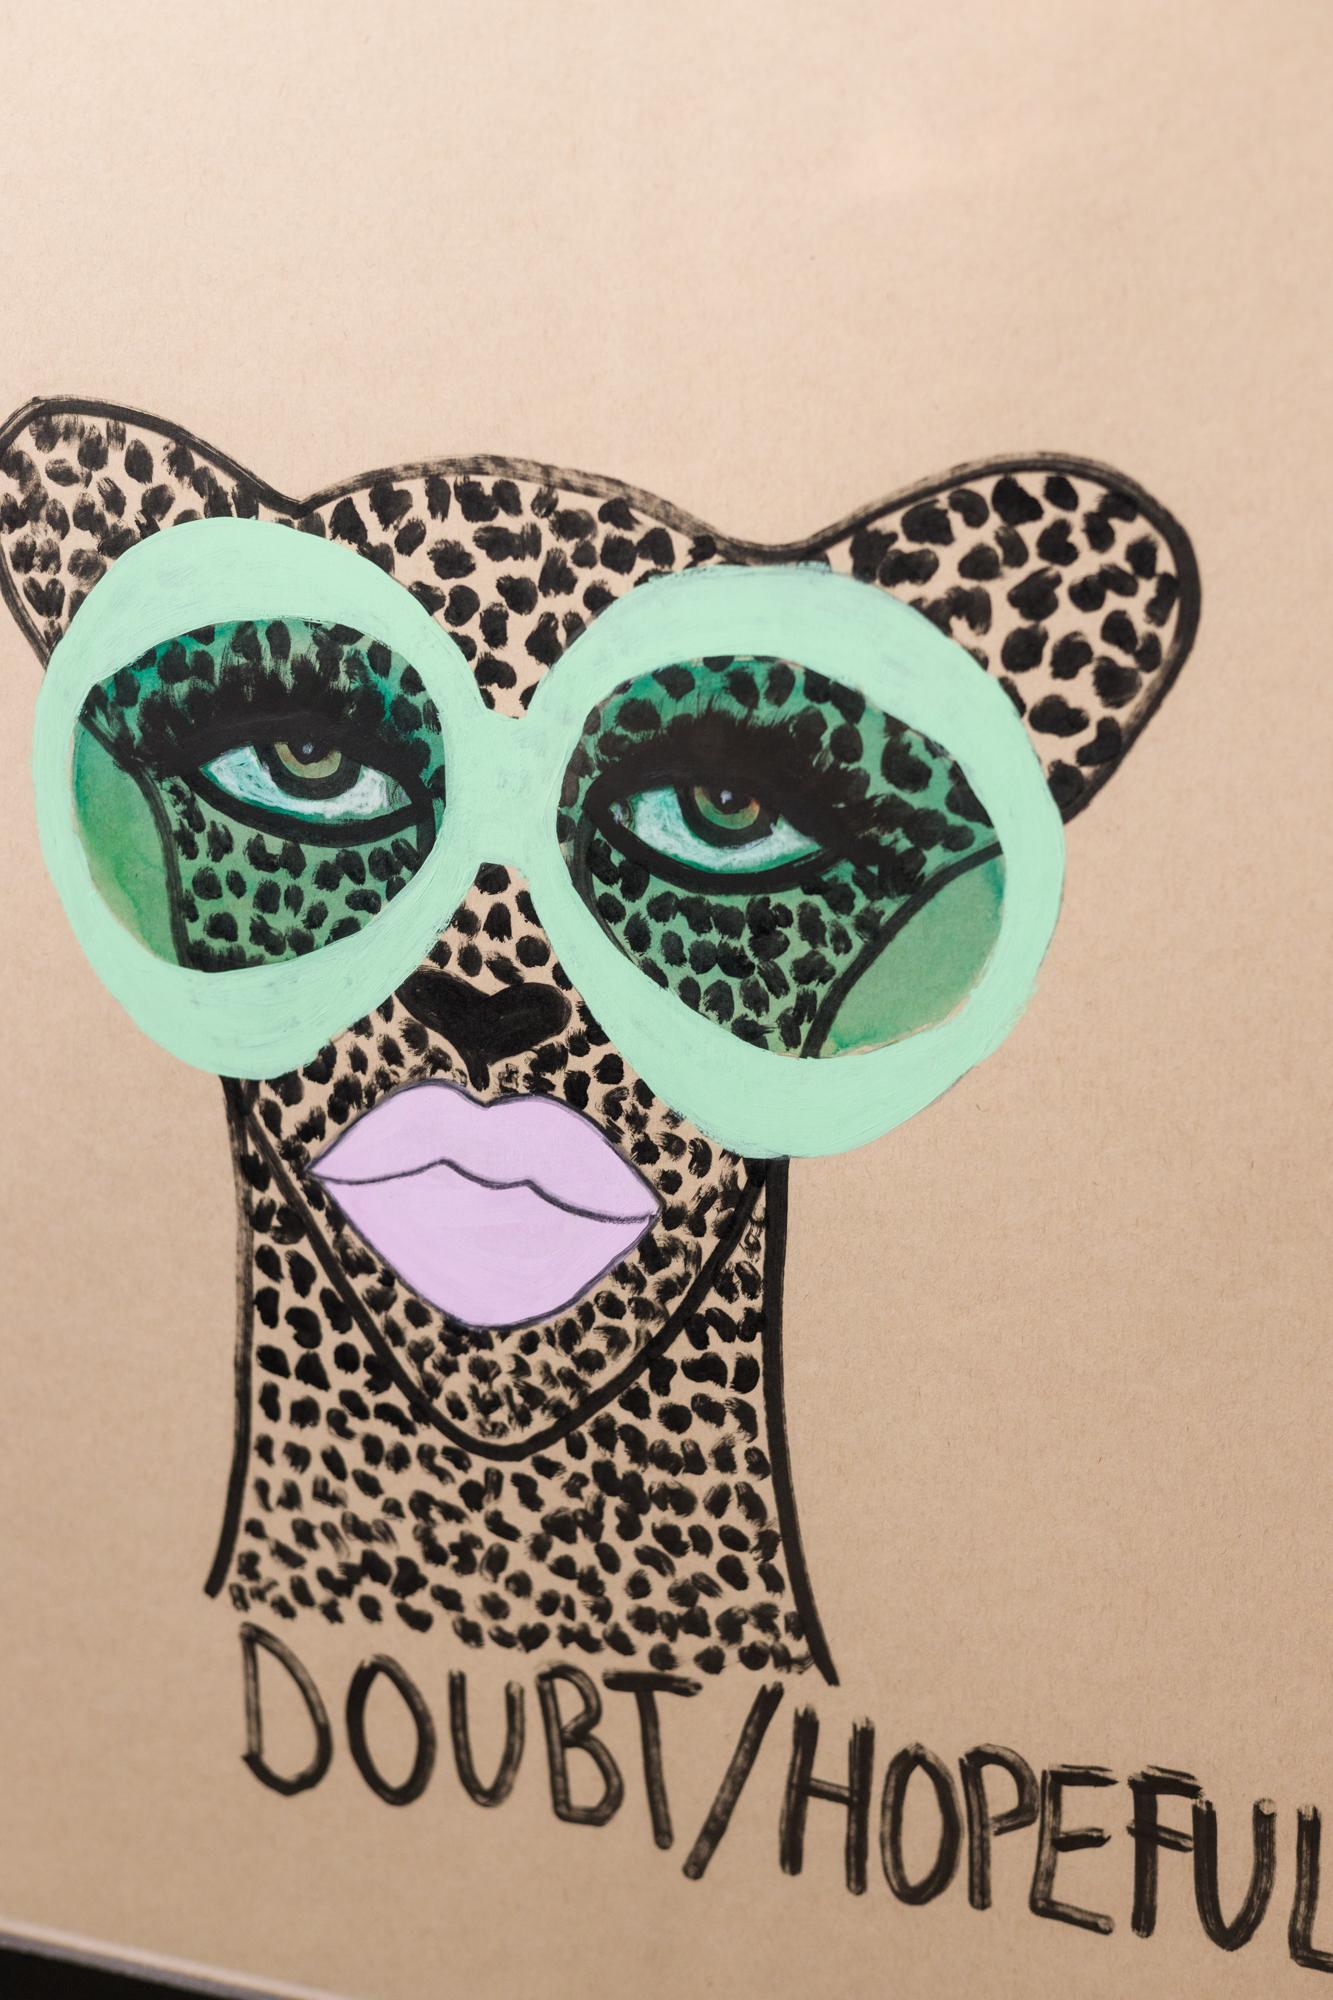 „Doubt/Hopeful“, figurative Illustration, Cheetah-Motiv, Text, Sonnenbrille – Art von Kendra Dandy